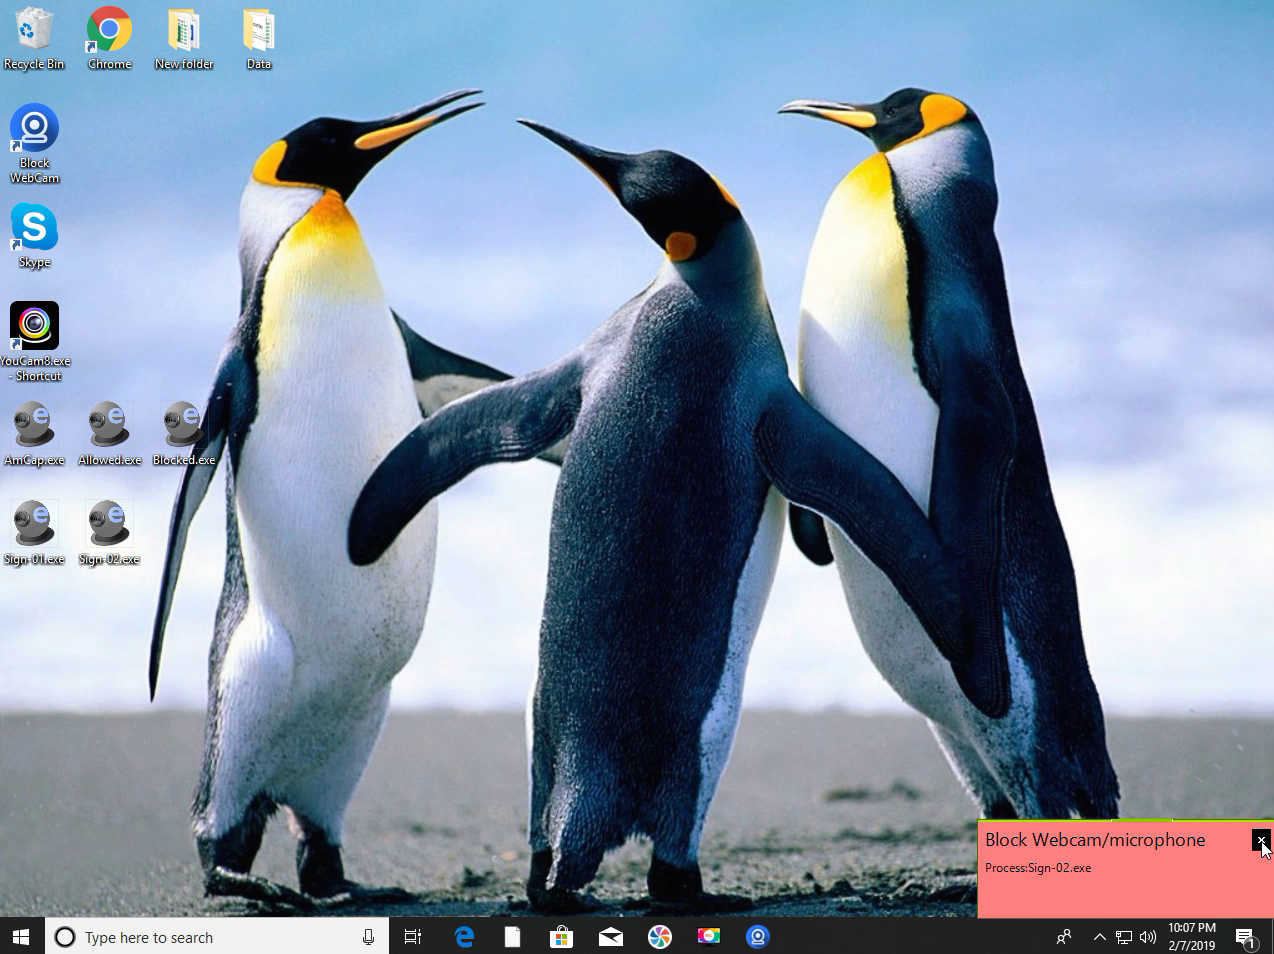 Block Webcam and microphone, Security Software Screenshot